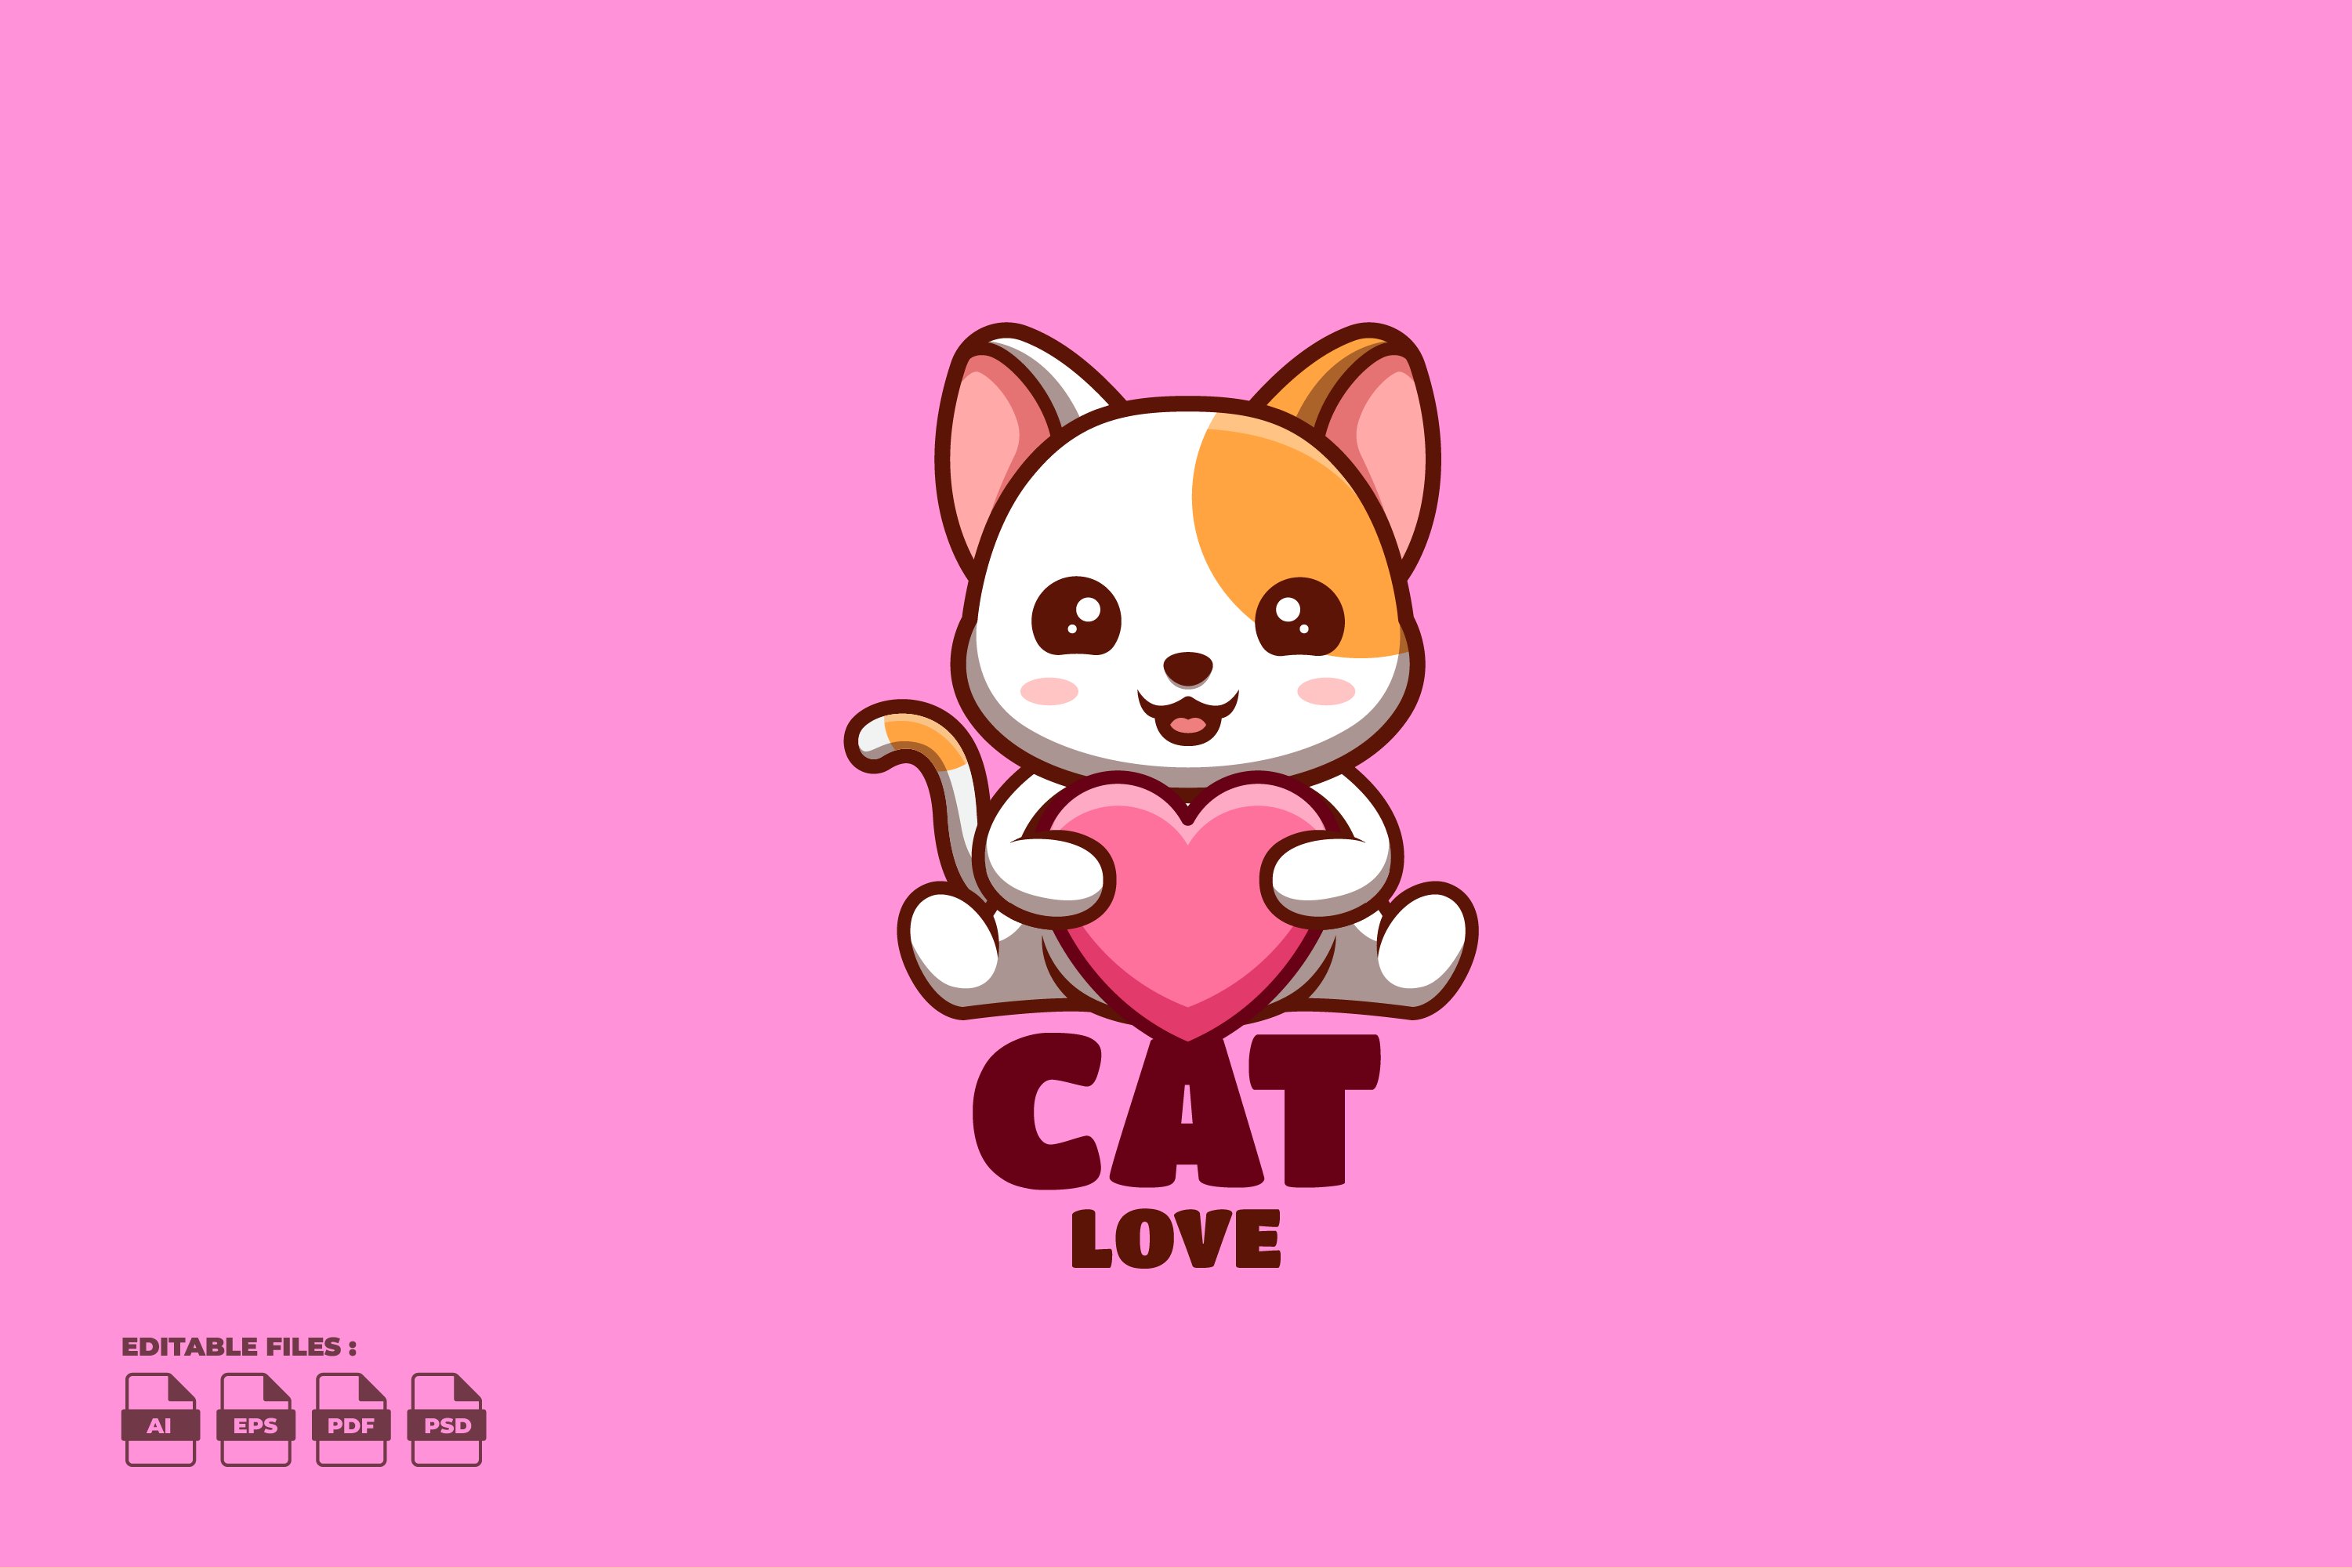 Love White Cat Cute Mascot Logo cover image.